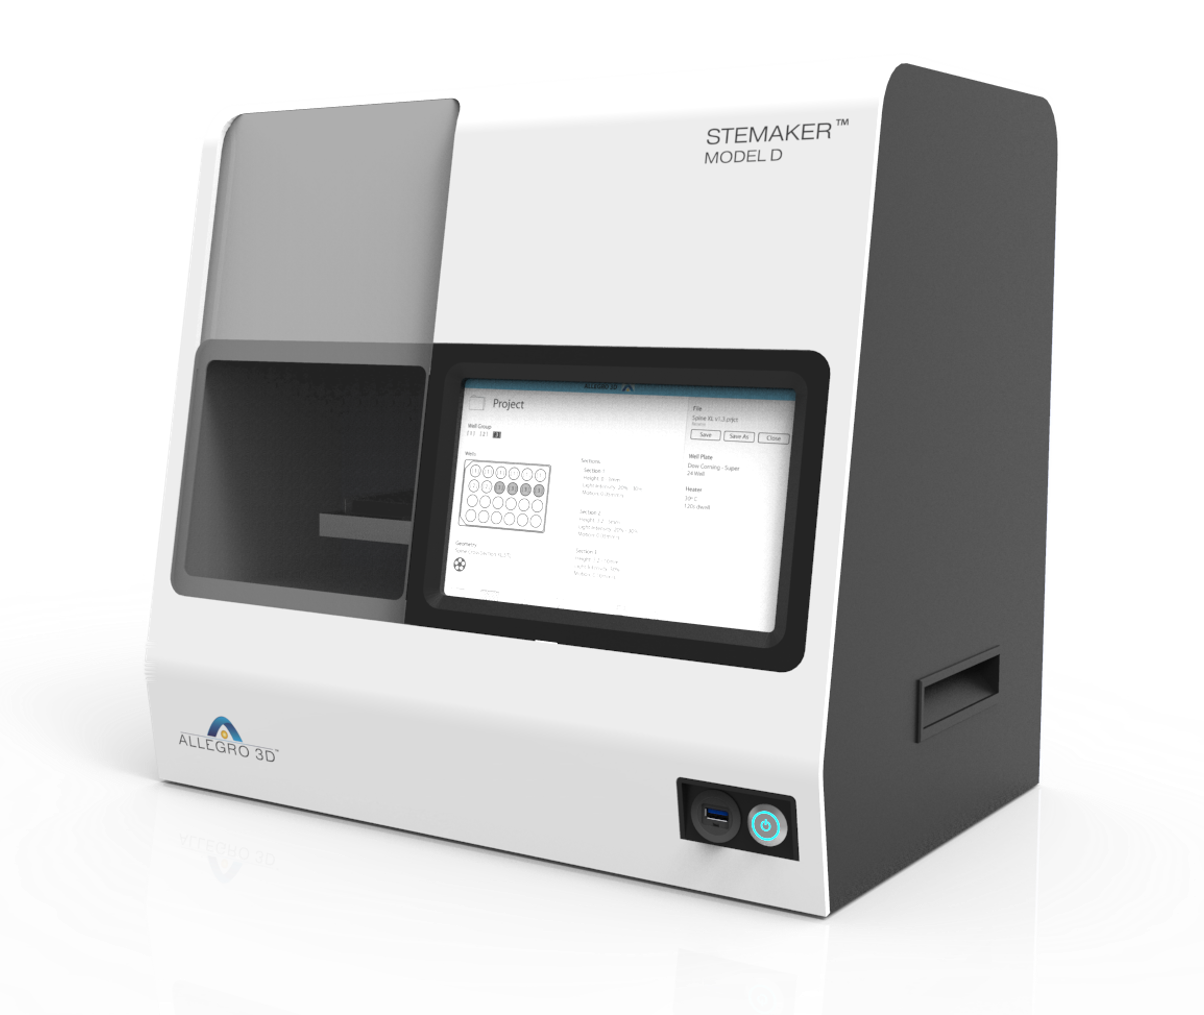 Allegro 3D's Stemaker Model D Bioprinter. 